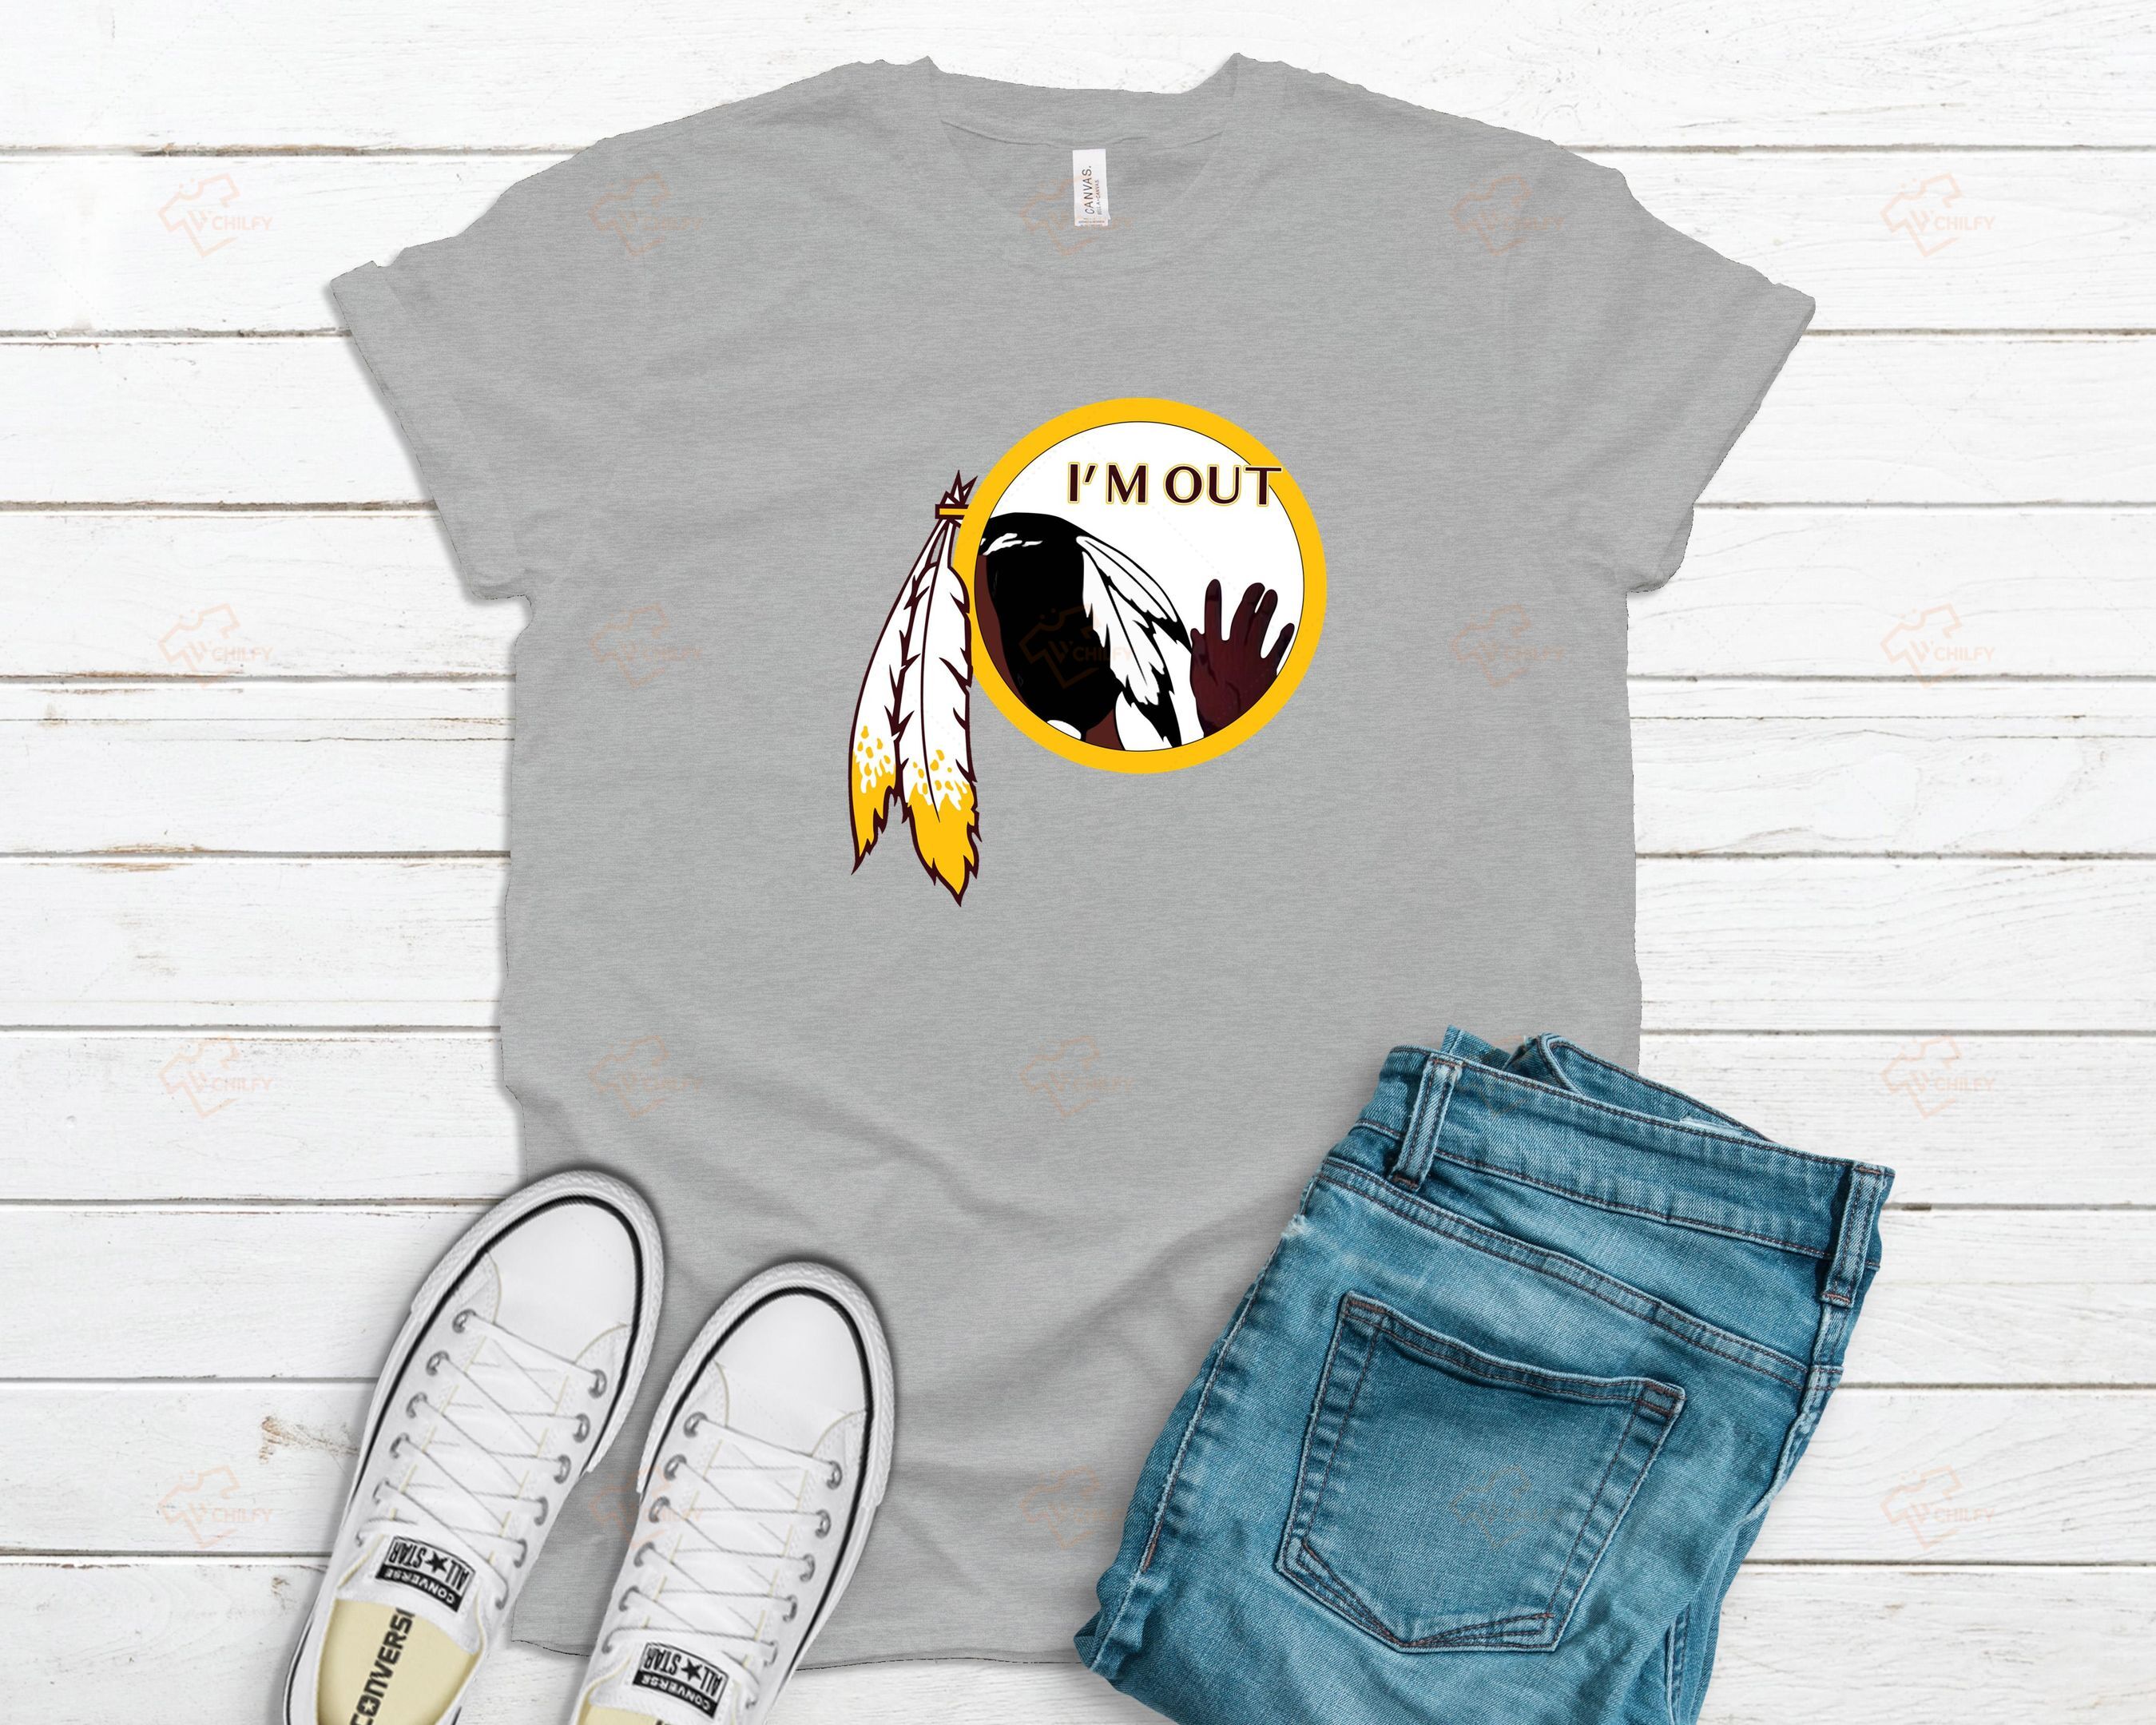 I’m out, American indian shirt, Native pride shirt, Native shirt